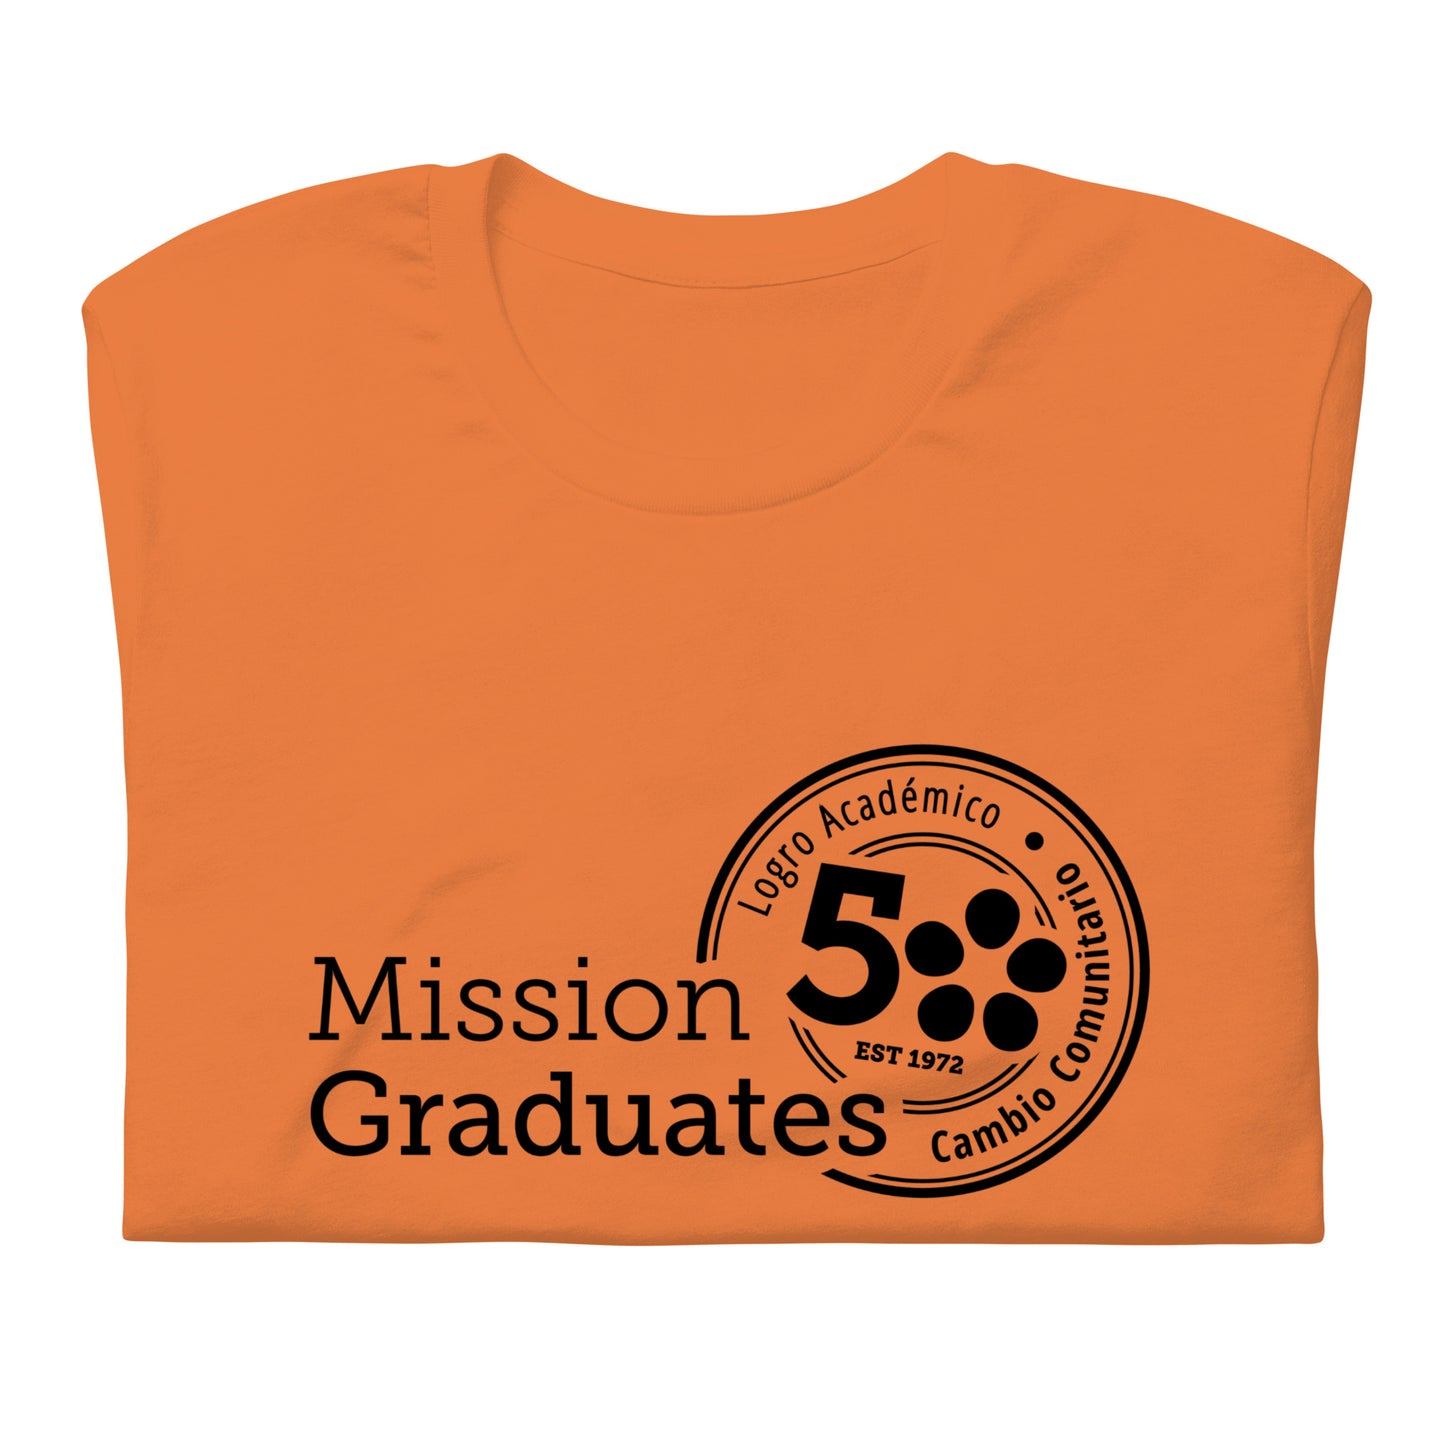 Logro Academico. Cambio Comunitario Camiseta de algodón orgánico unisex Unisex t-shirt (naranja)